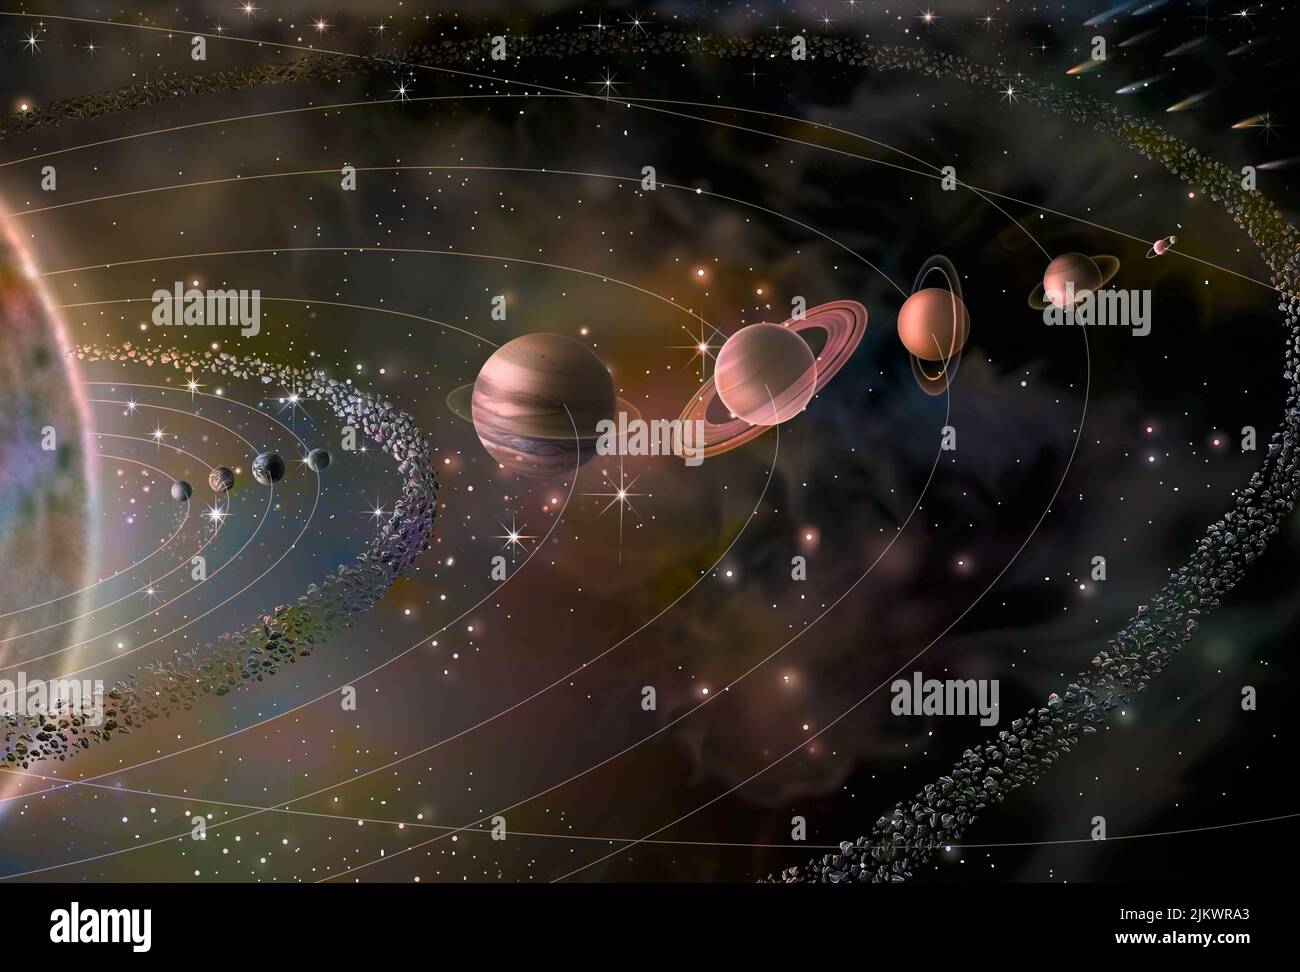 Solar system with its nine planets (Mercury, Venus, Earth, Mars, Jupiter, Saturn, Uranus, Neptune, Pluto) and the sun. Stock Photo